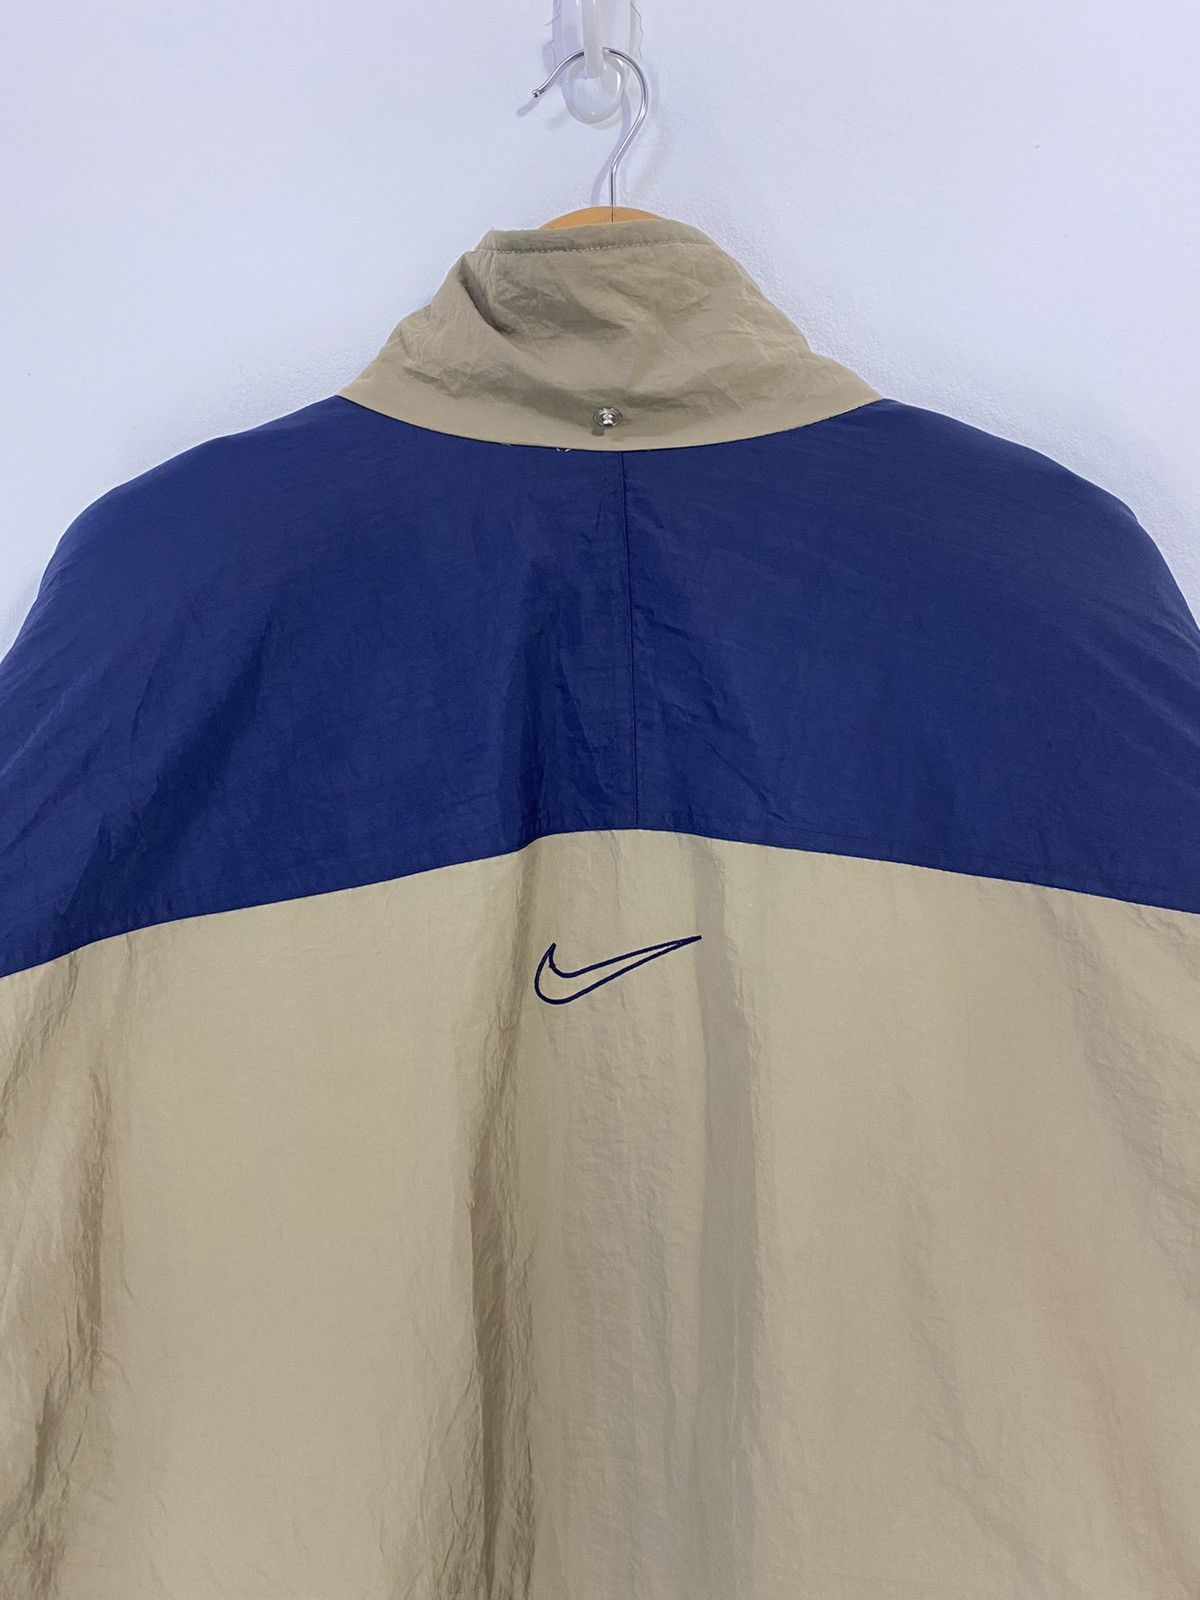 Vintage Nike Air Anorak Jacket Oversized Design With Hoodies - 8